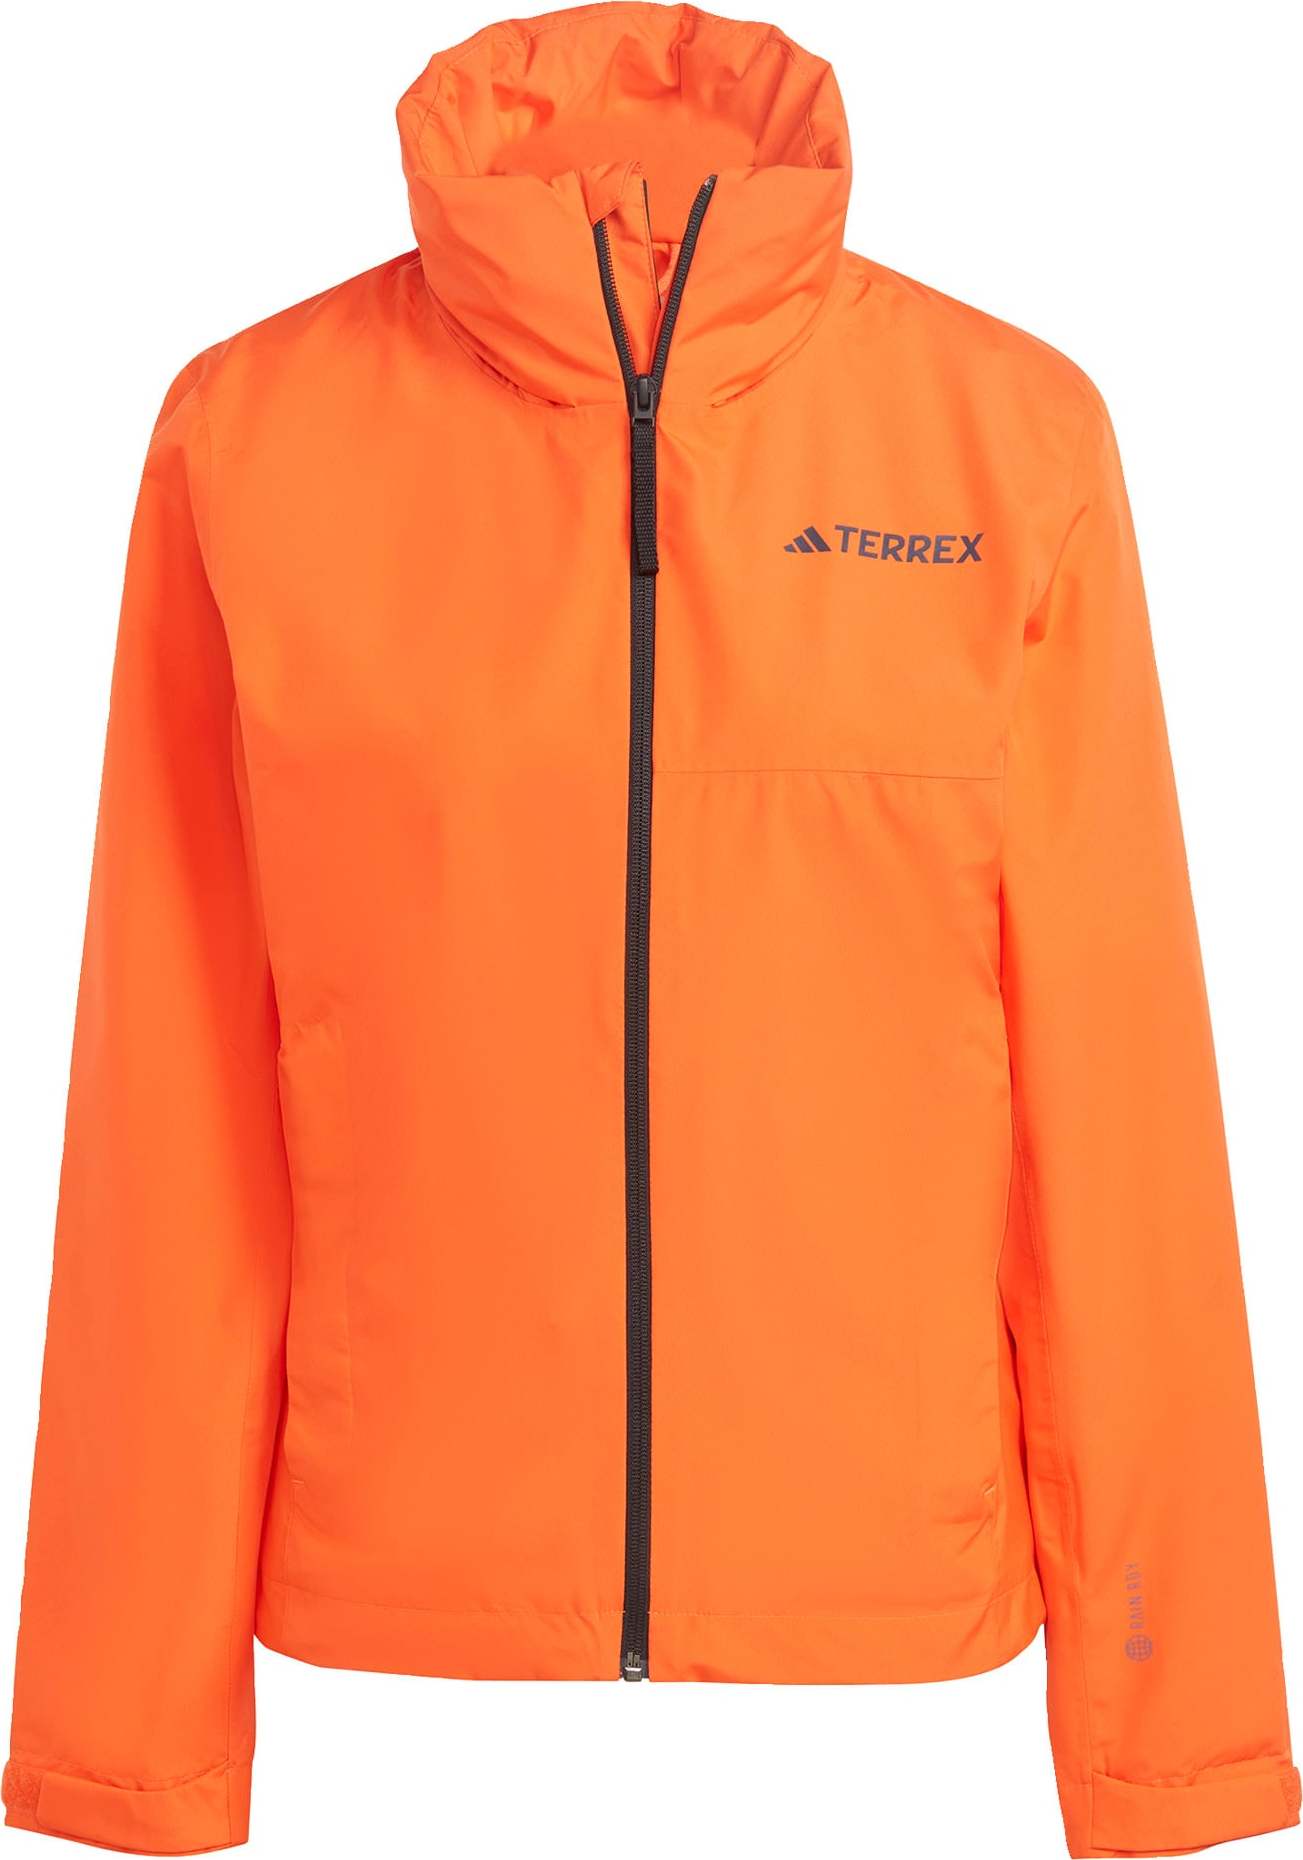 Outdoorová bunda adidas Terrex oranžová / černá